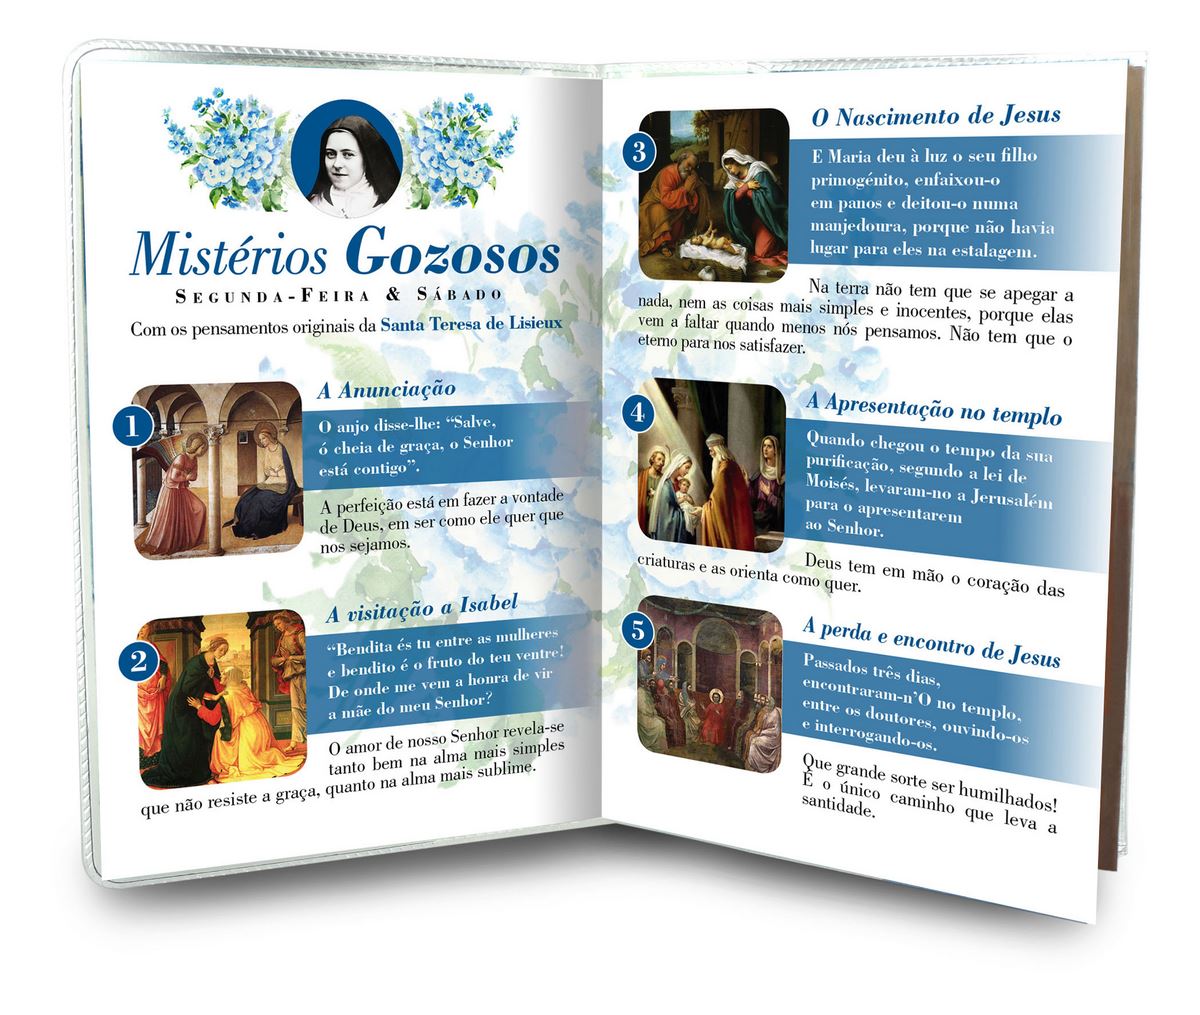 libretto con rosario santa teresa di lisieux - portoghese